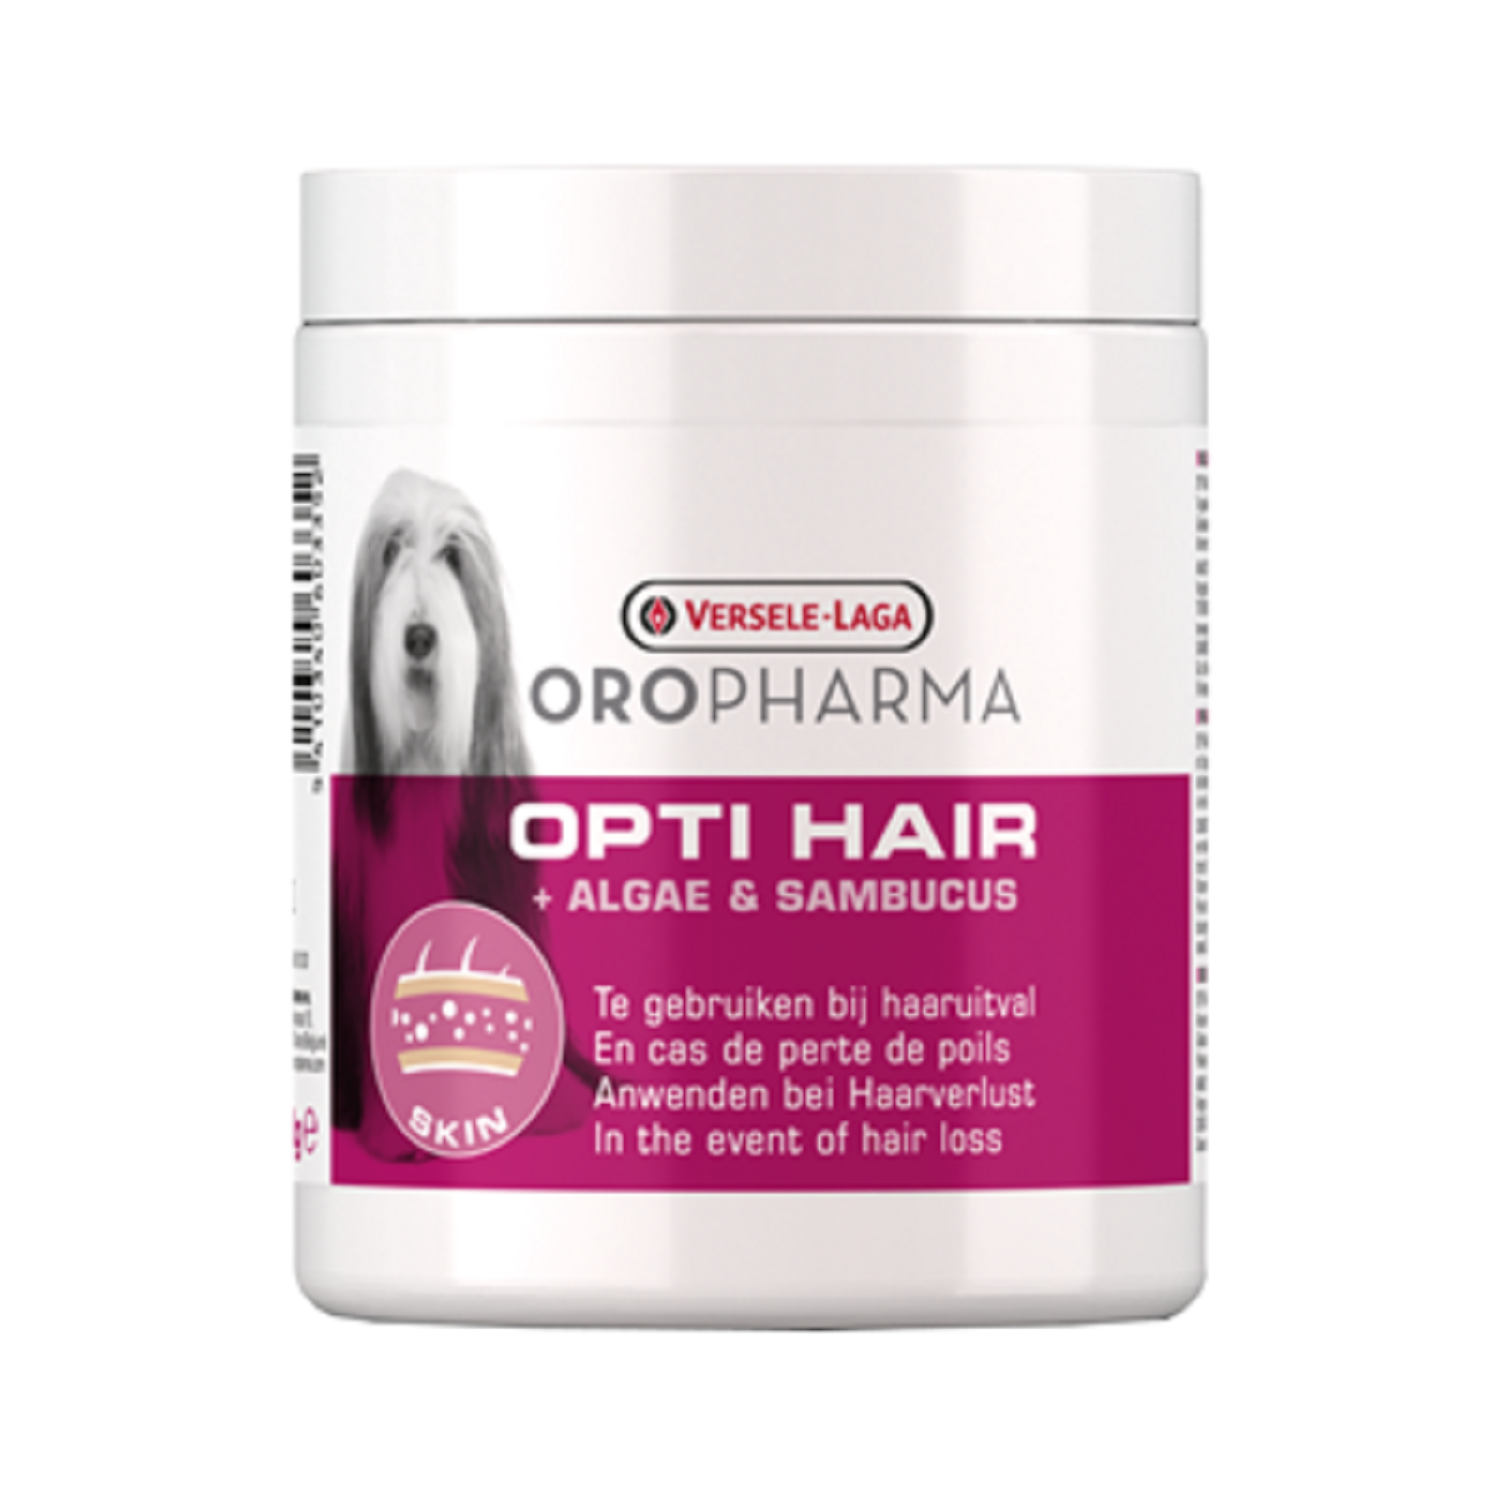 Oropharma opti hair